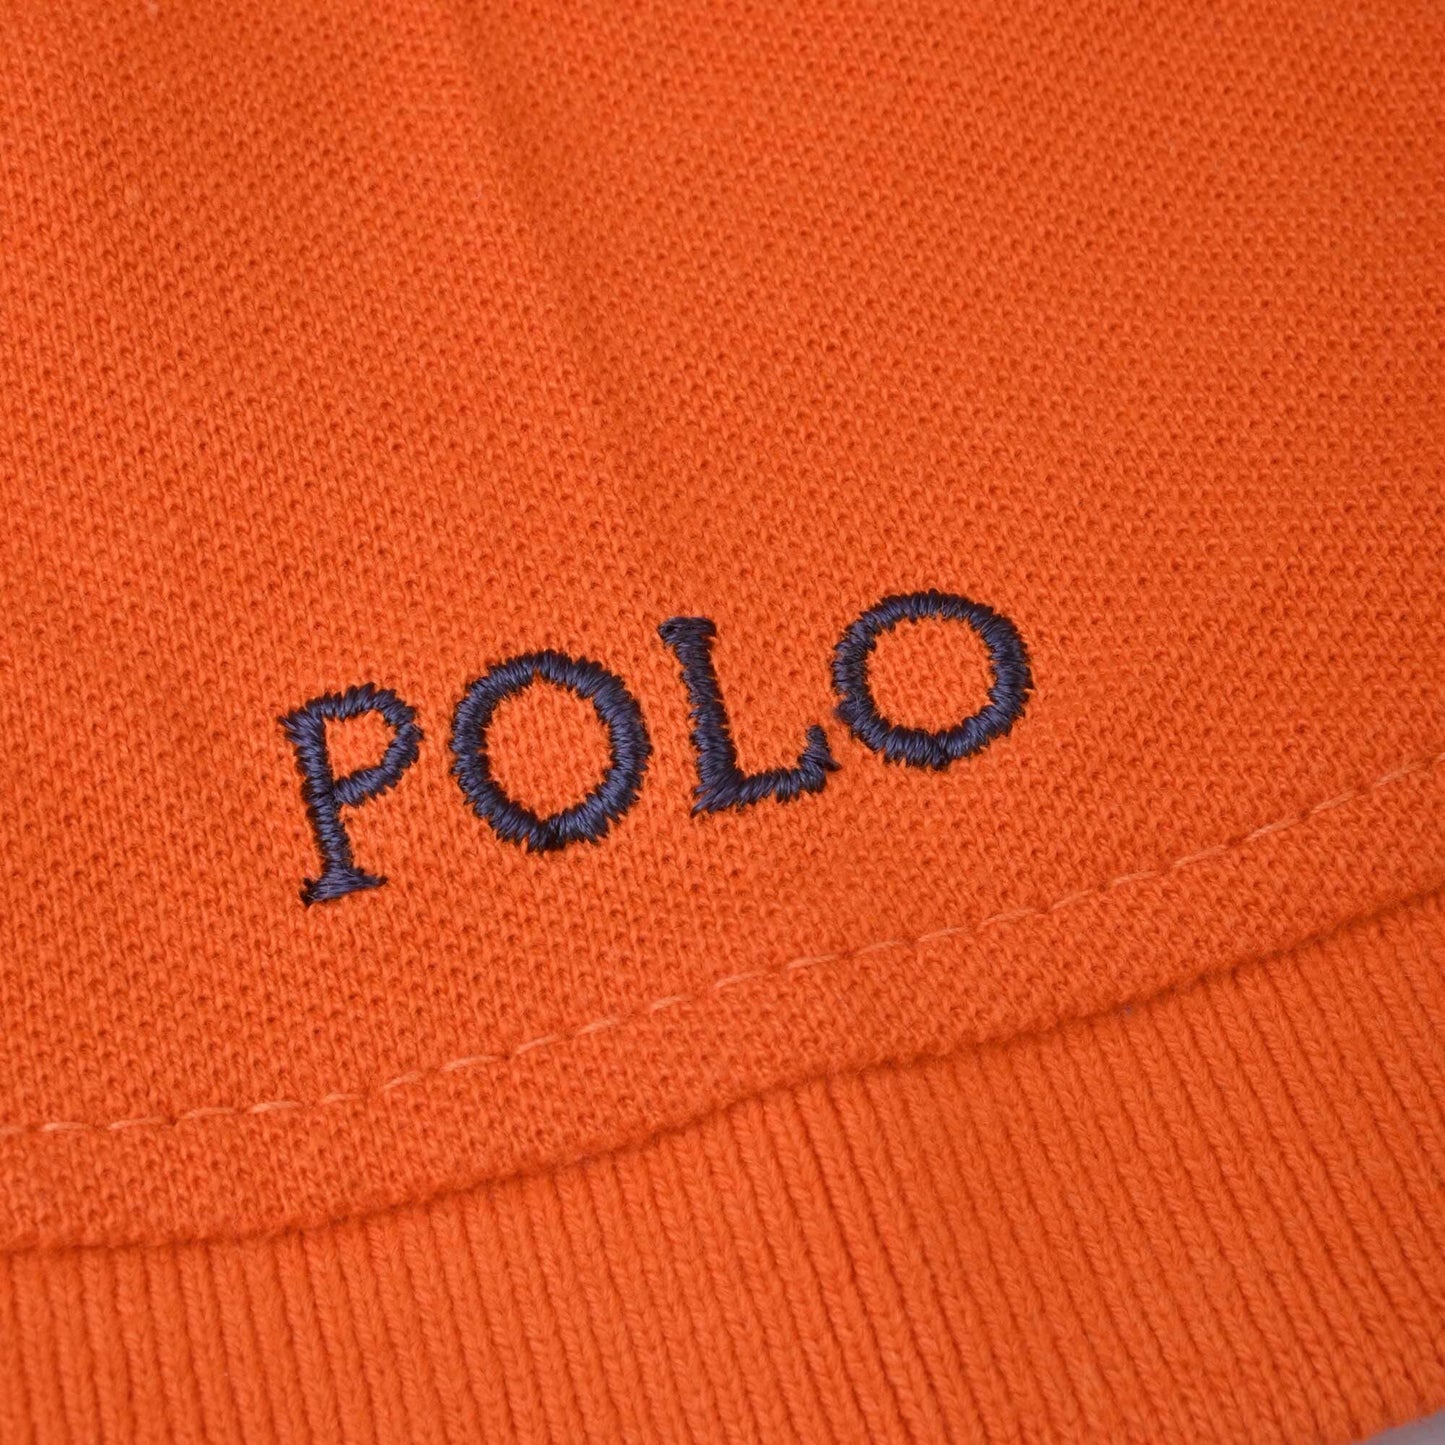 Polo Republica Men's Lion Polo & 5 Embroidered Short Sleeve Polo Shirt Men's Polo Shirt Polo Republica 